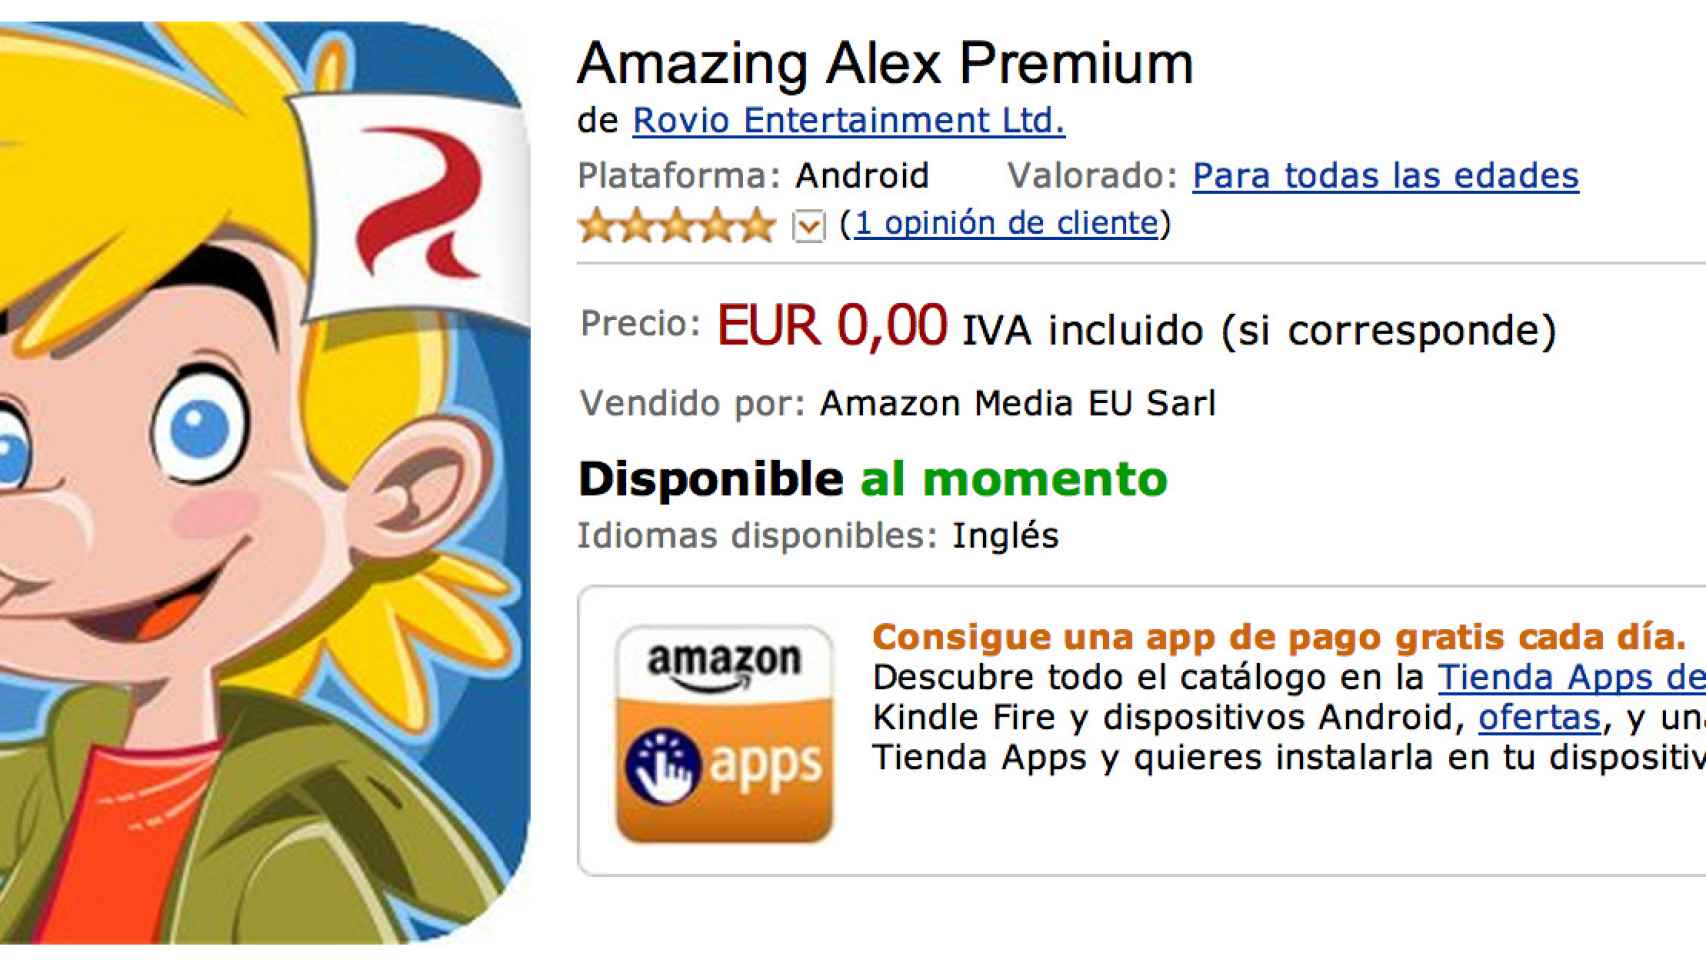 Amazing Alex Premium disponible hoy gratis en Amazon